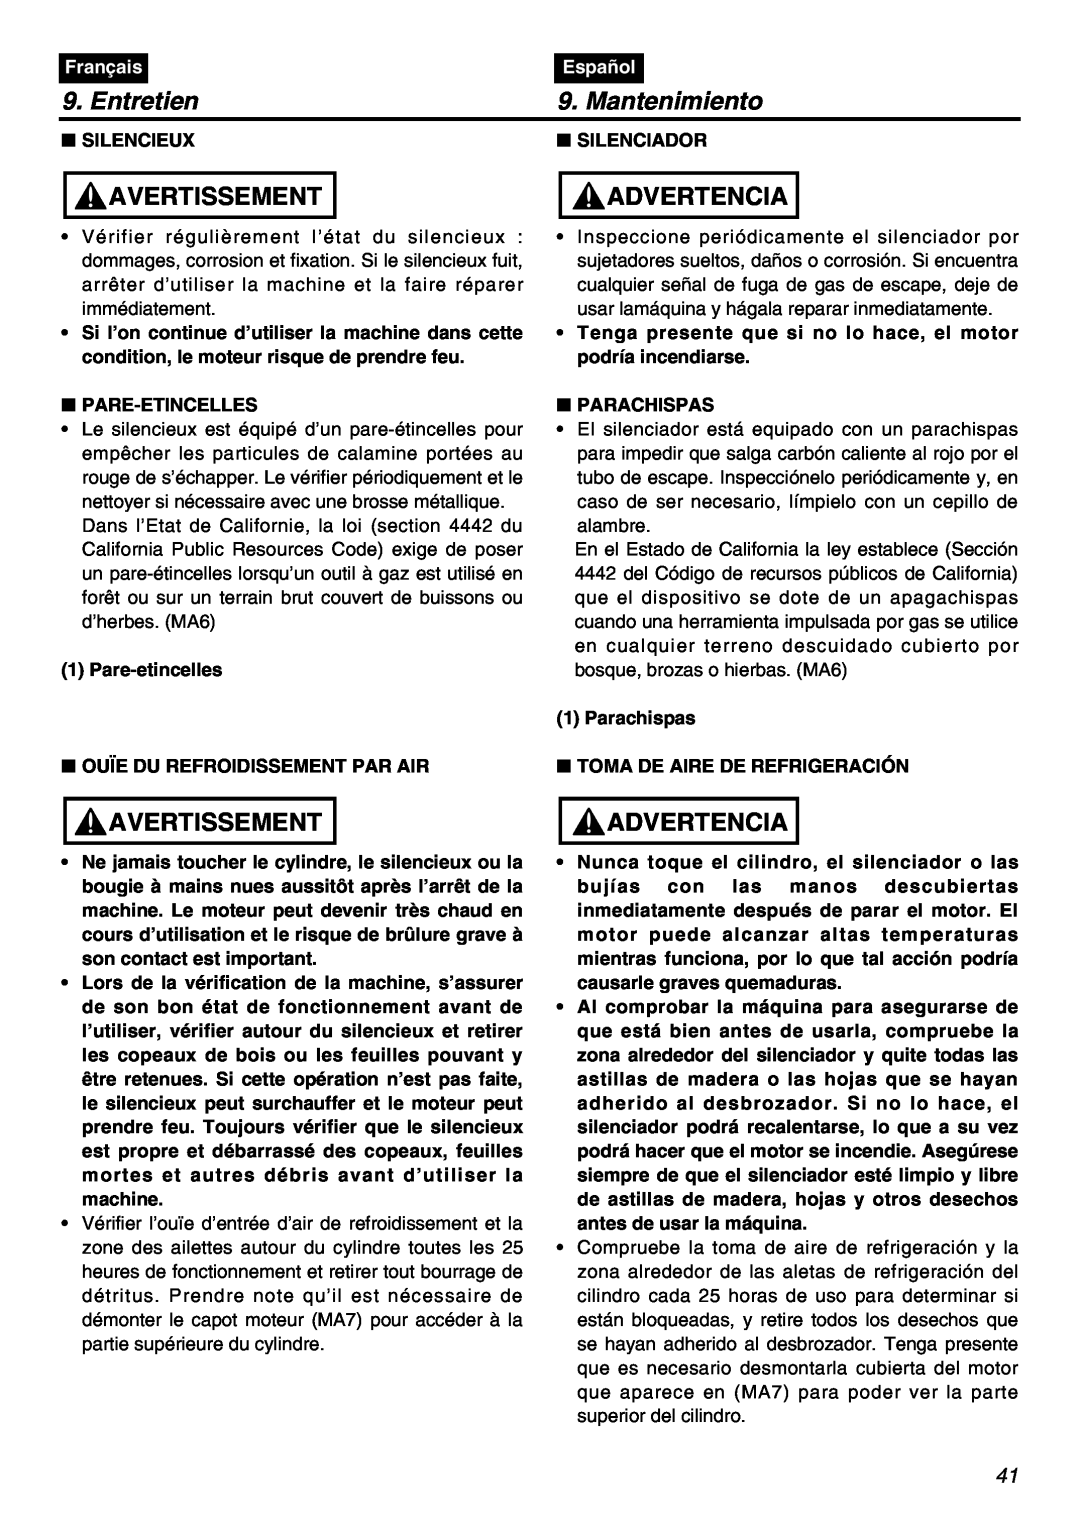 Univex SRTZ2401-CA manual Entretien, Mantenimiento, Avertissement, Advertencia, Français, Español, Silencieux, Silenciador 